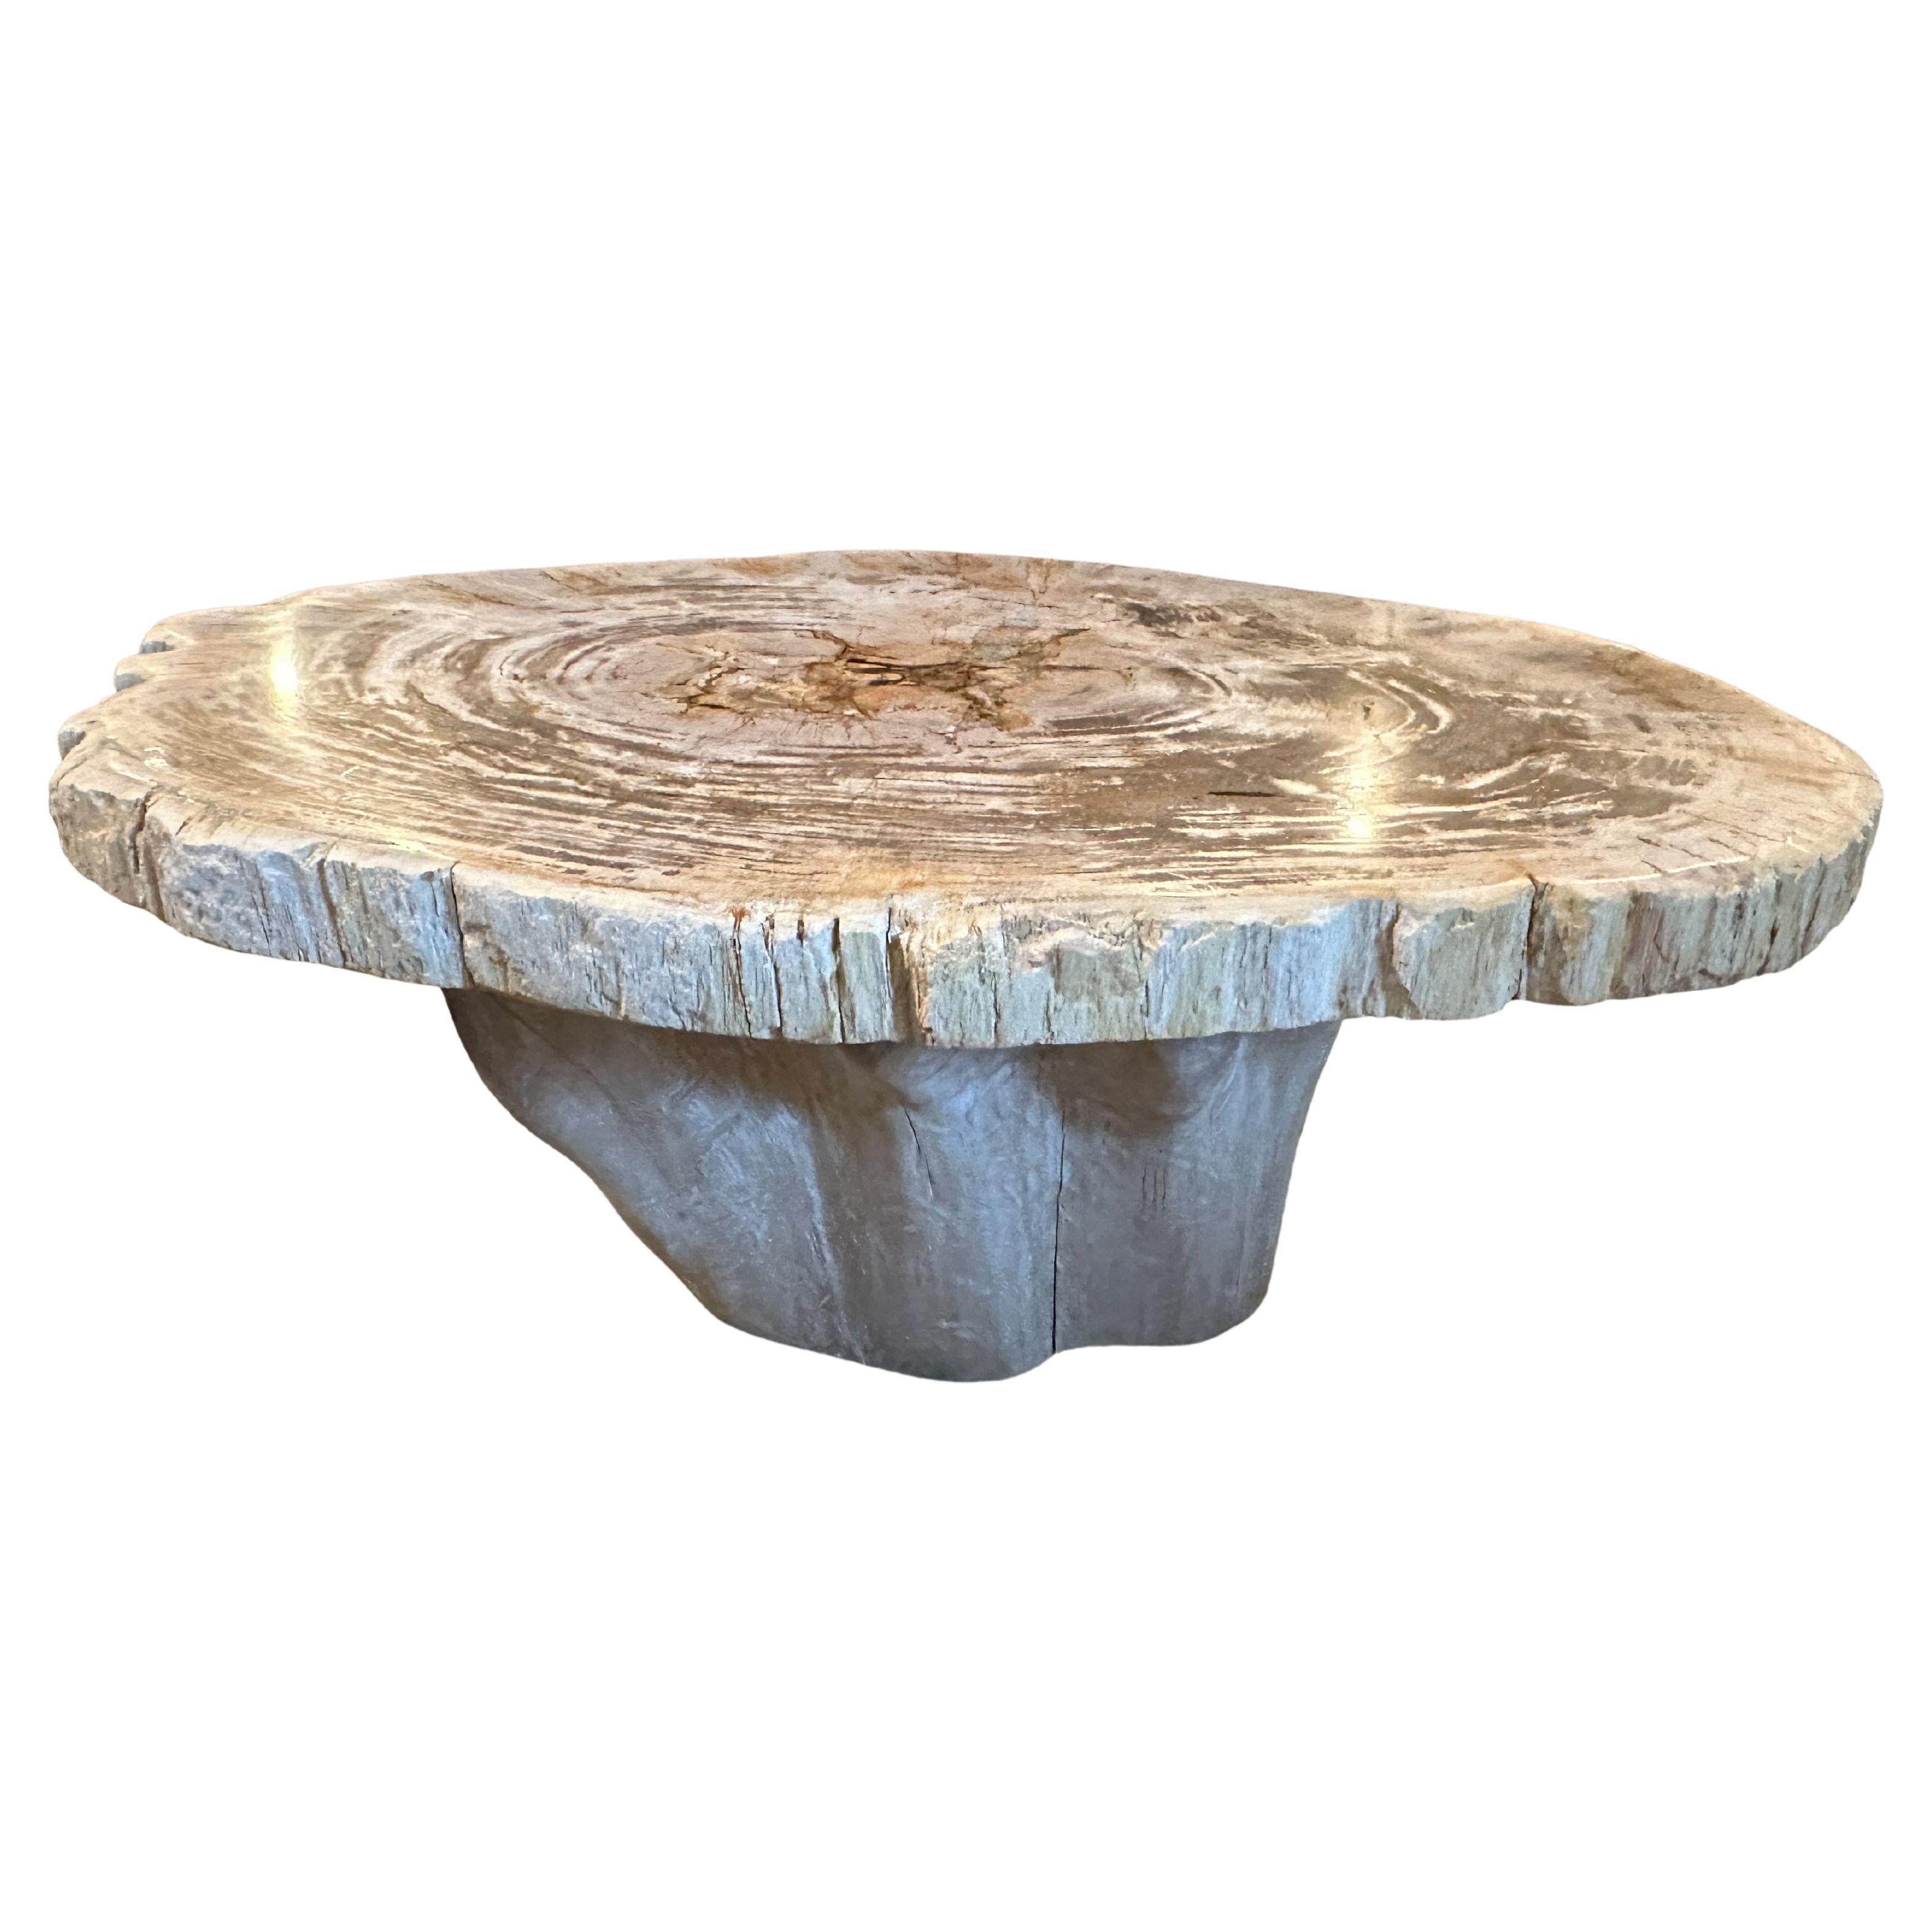 Andrianna Shamaris Oval Petrified Wood Coffee Table with an Organic Teak Base